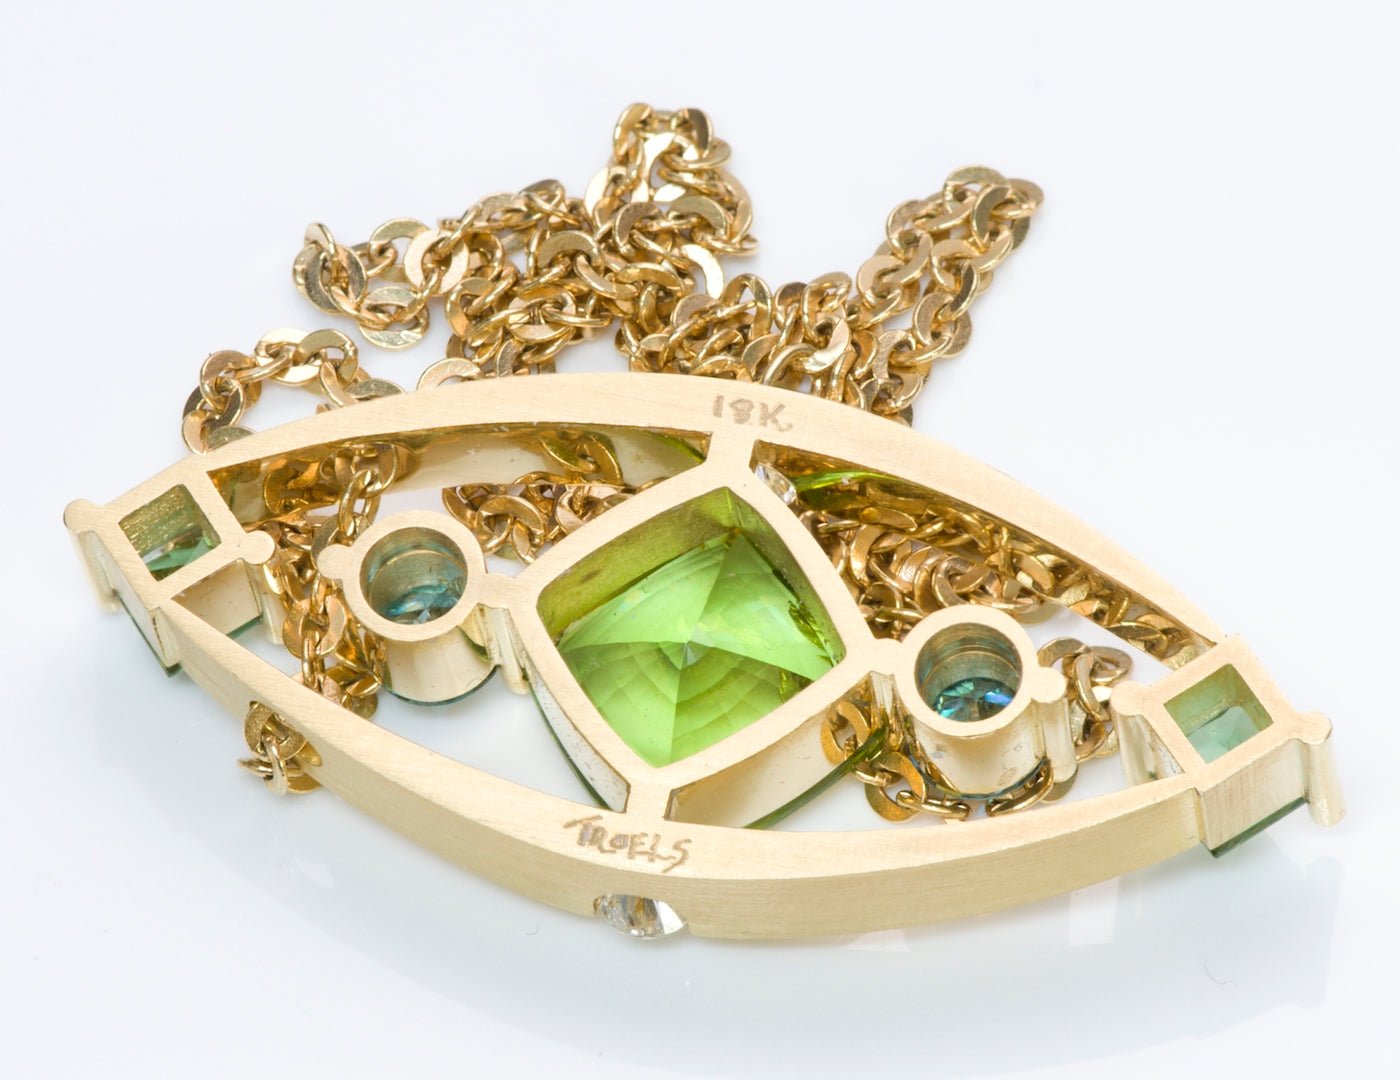 Troels D. Larsen Gold Gemstone Necklace